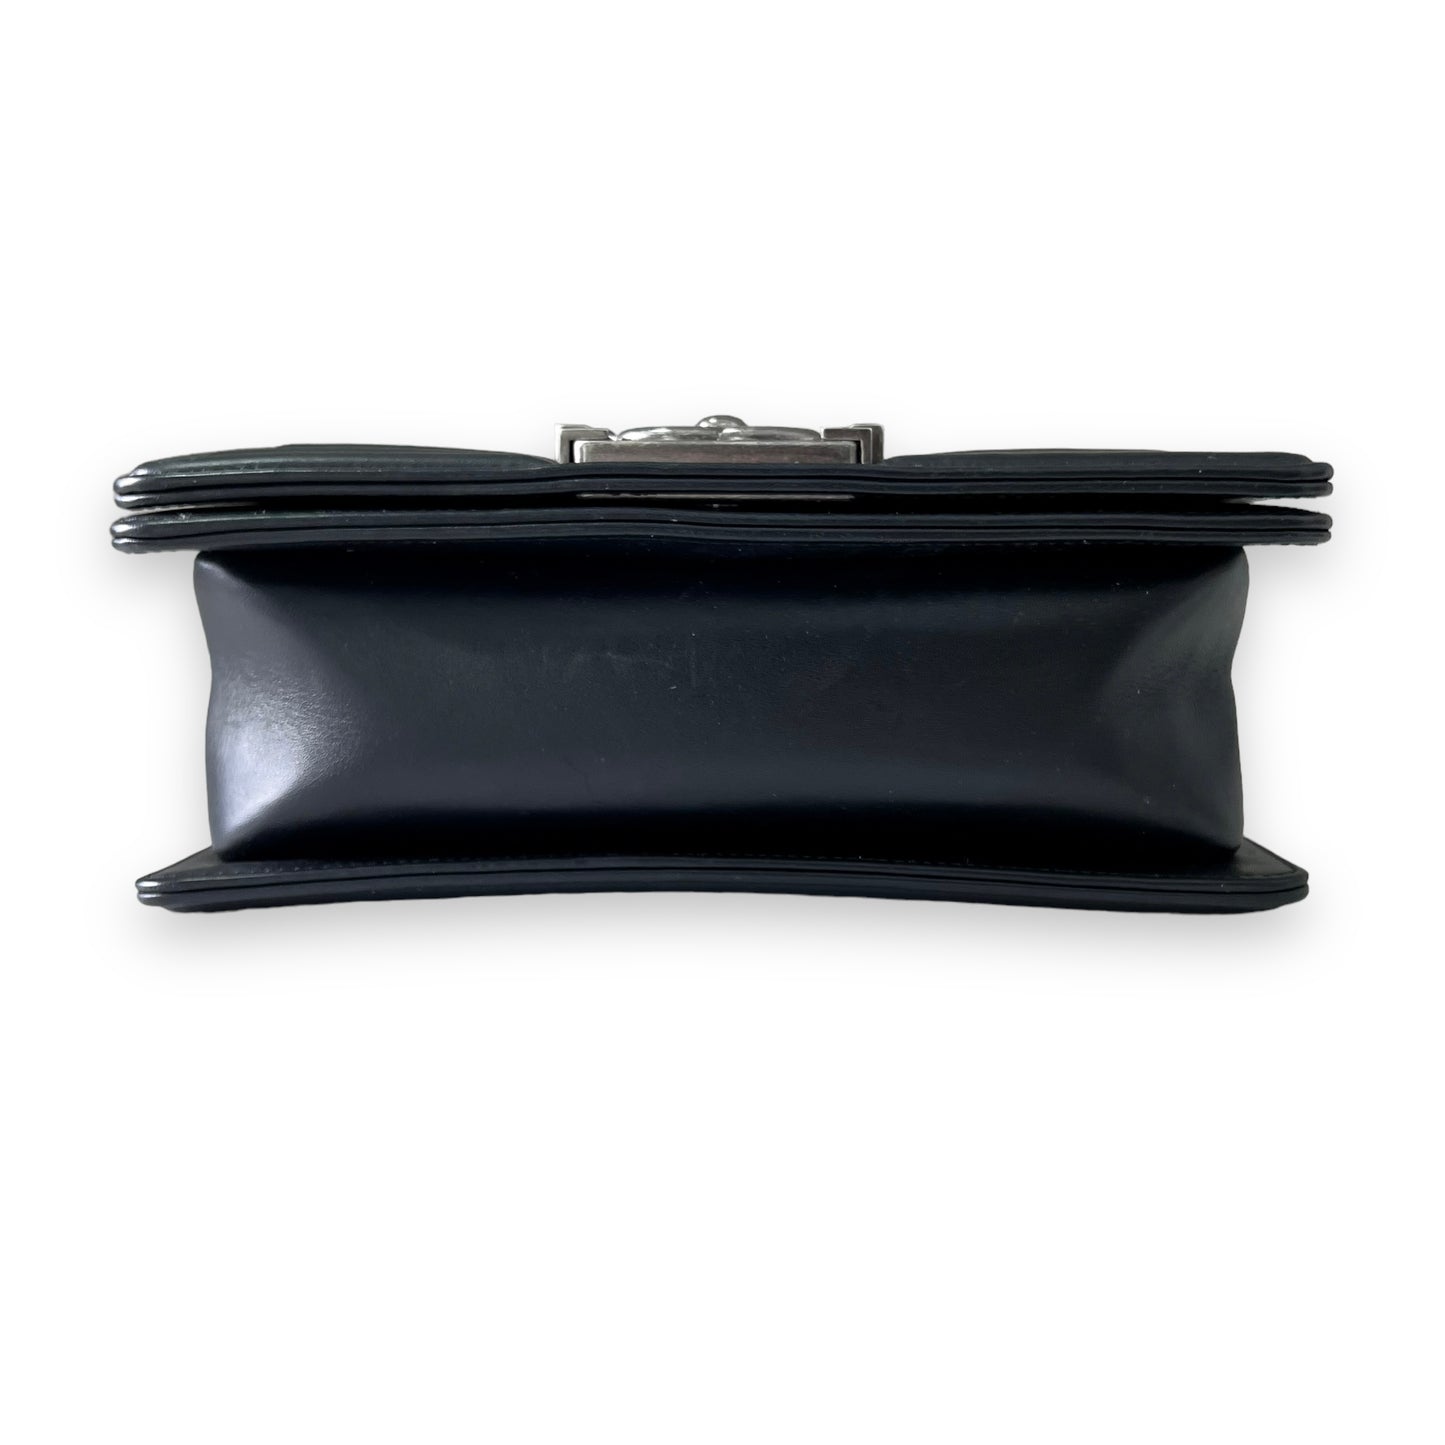 Chanel Boy Flap Limited Edition Small Bag